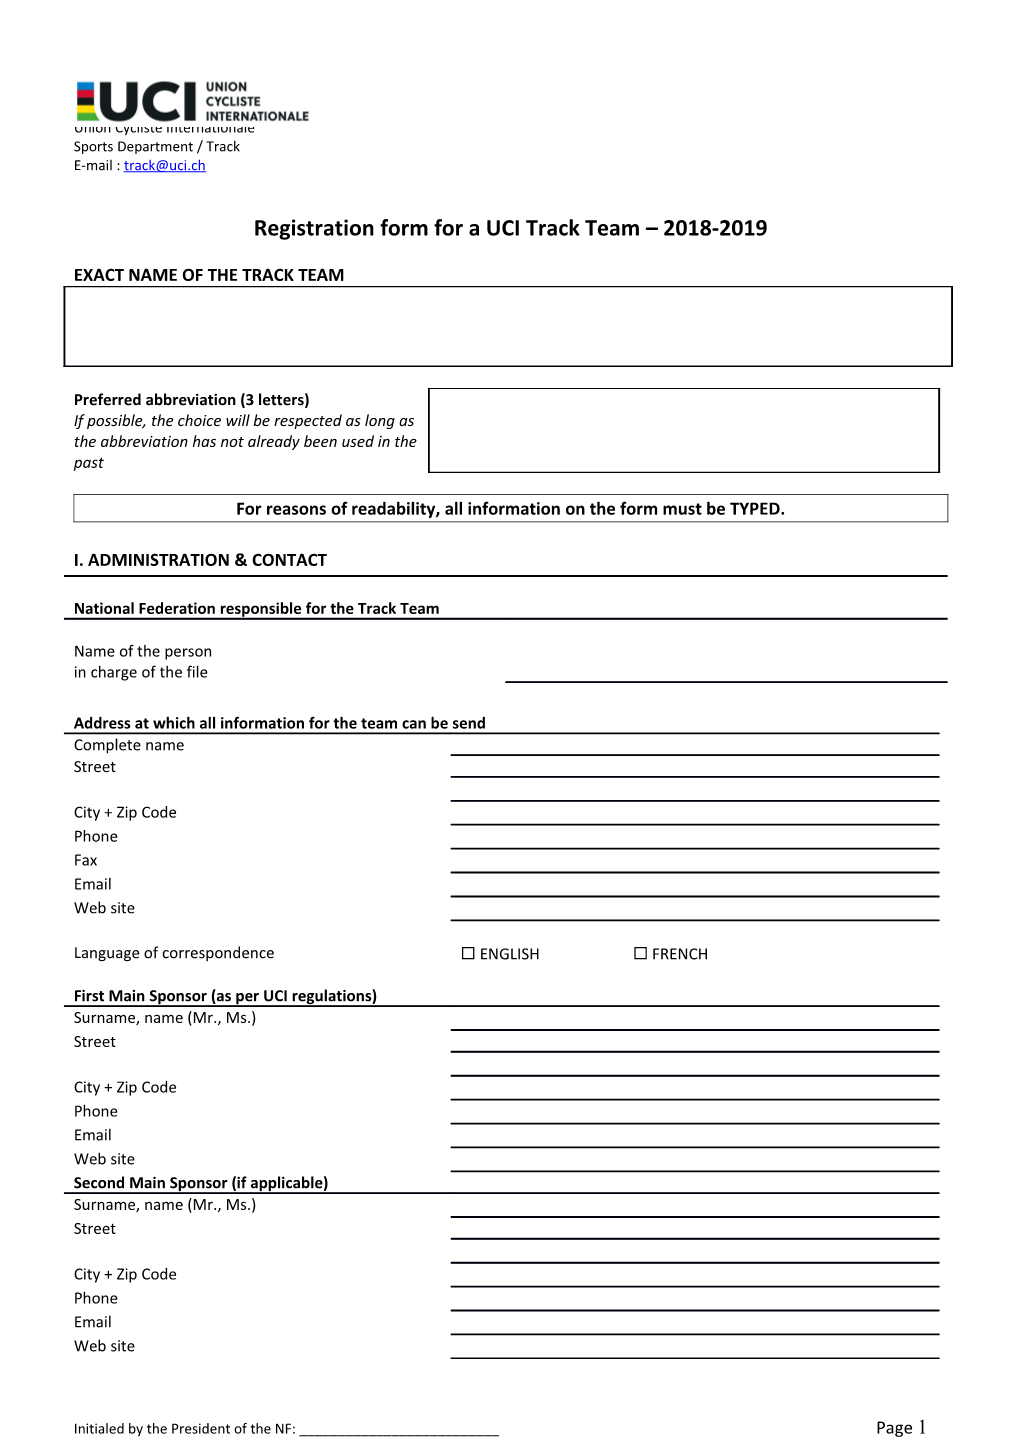 Registration Form for a UCI Track Team 2018-2019